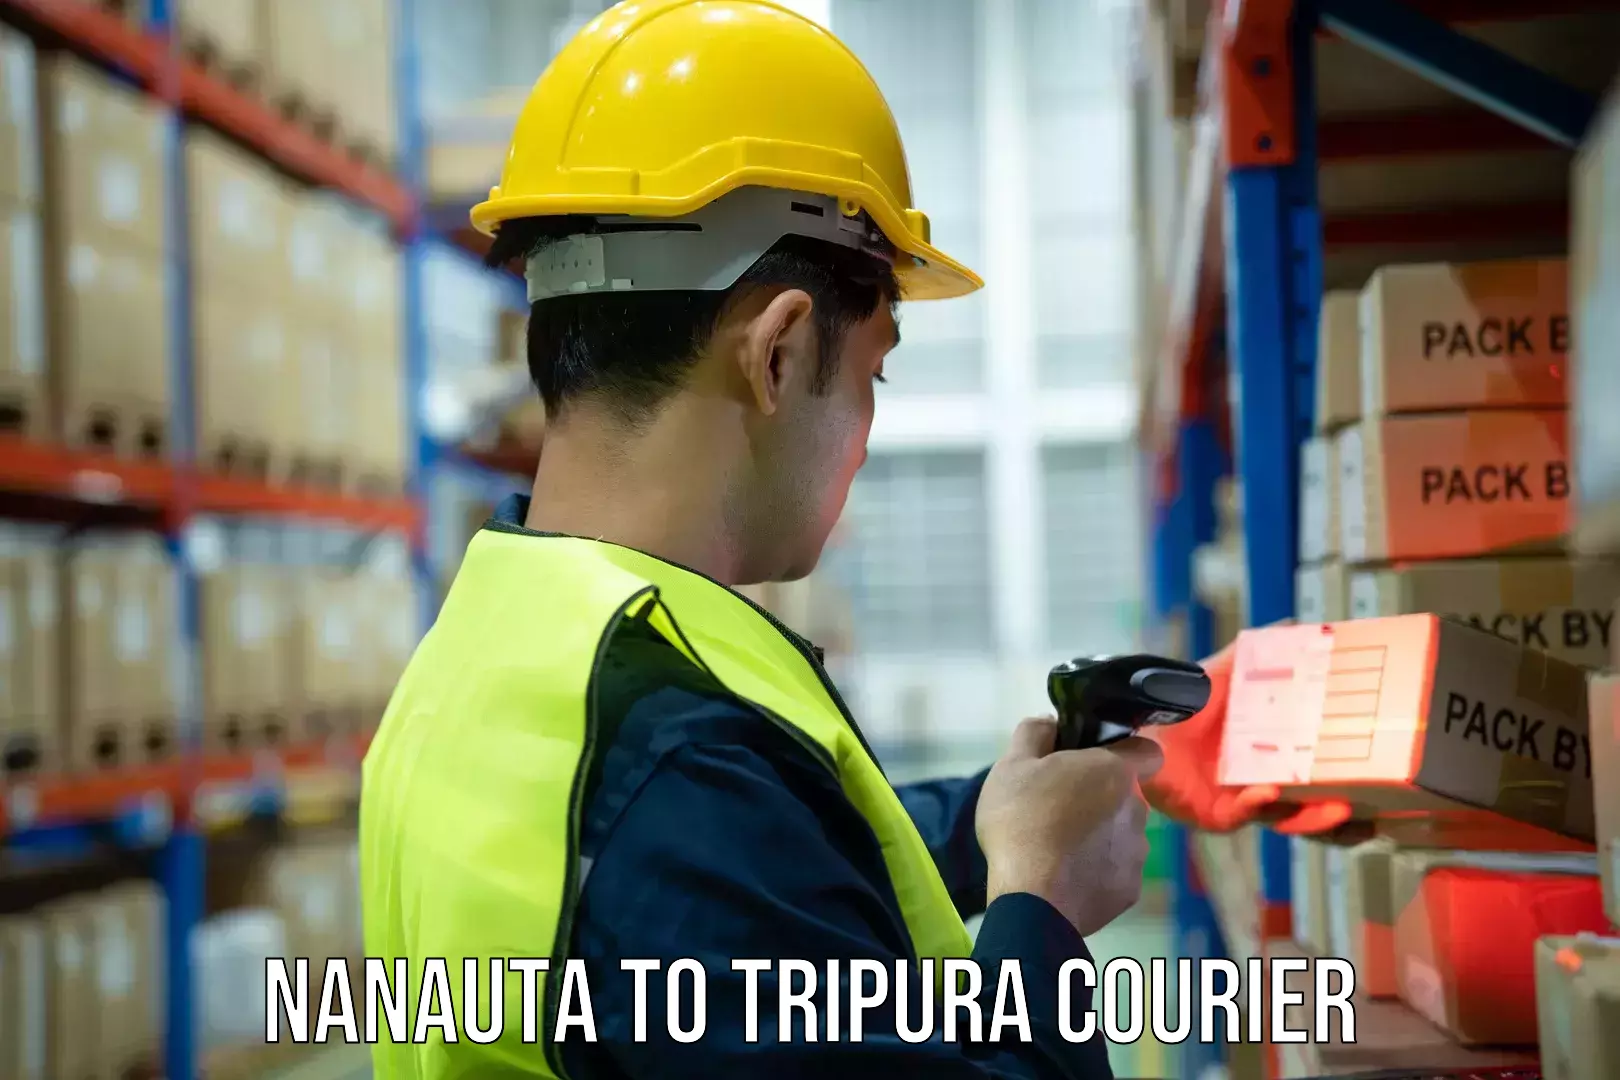 Professional courier handling Nanauta to Tripura